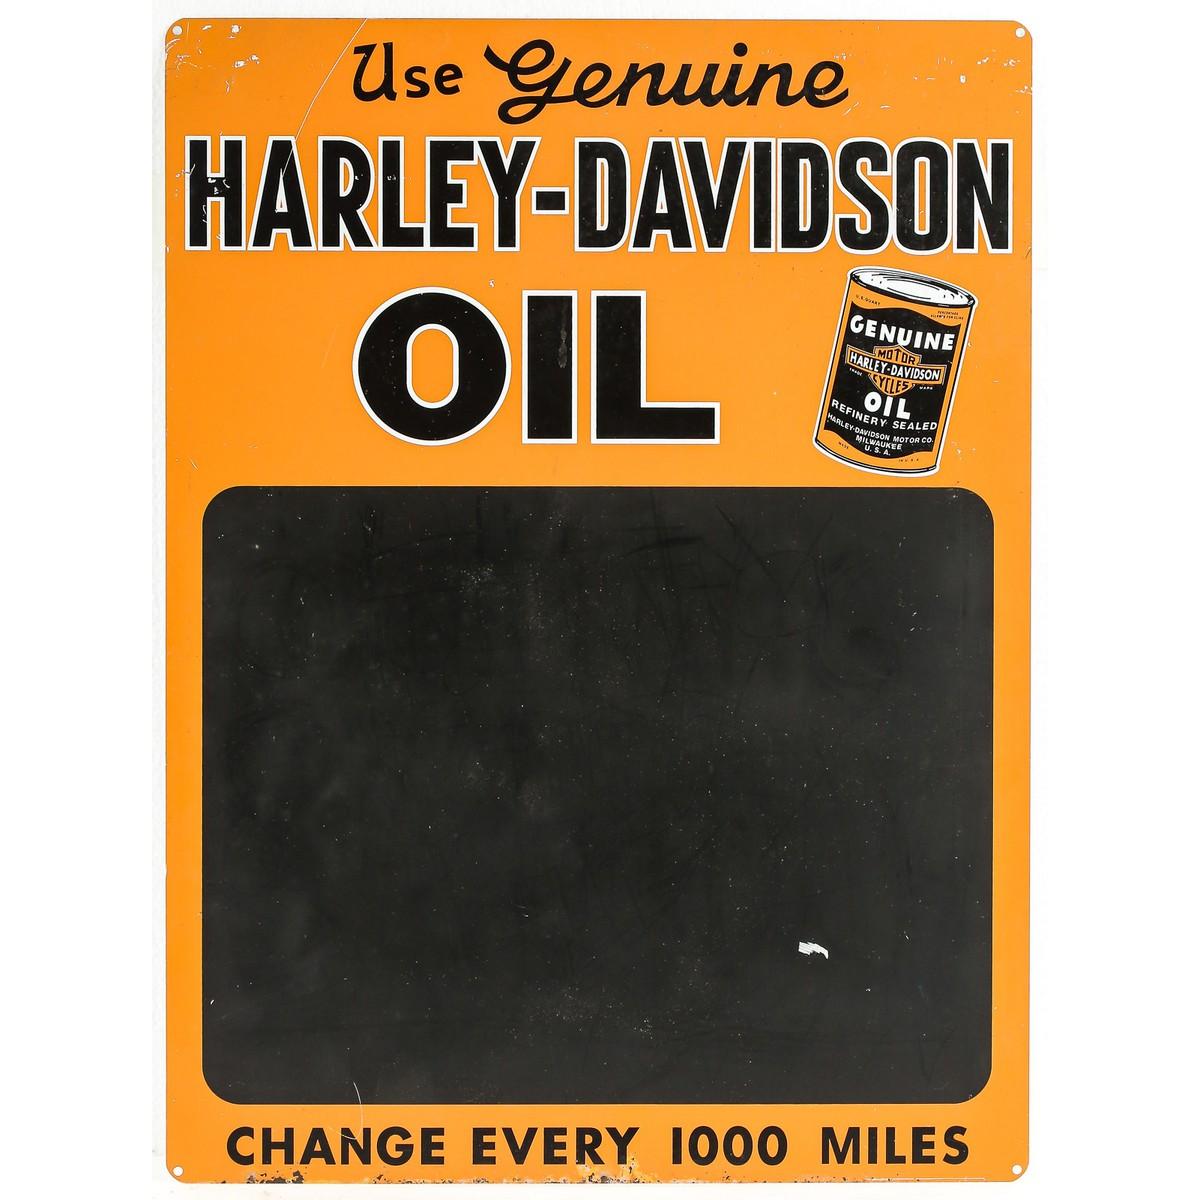 Harley-Davidson Oil Single Sided Advertising Sign